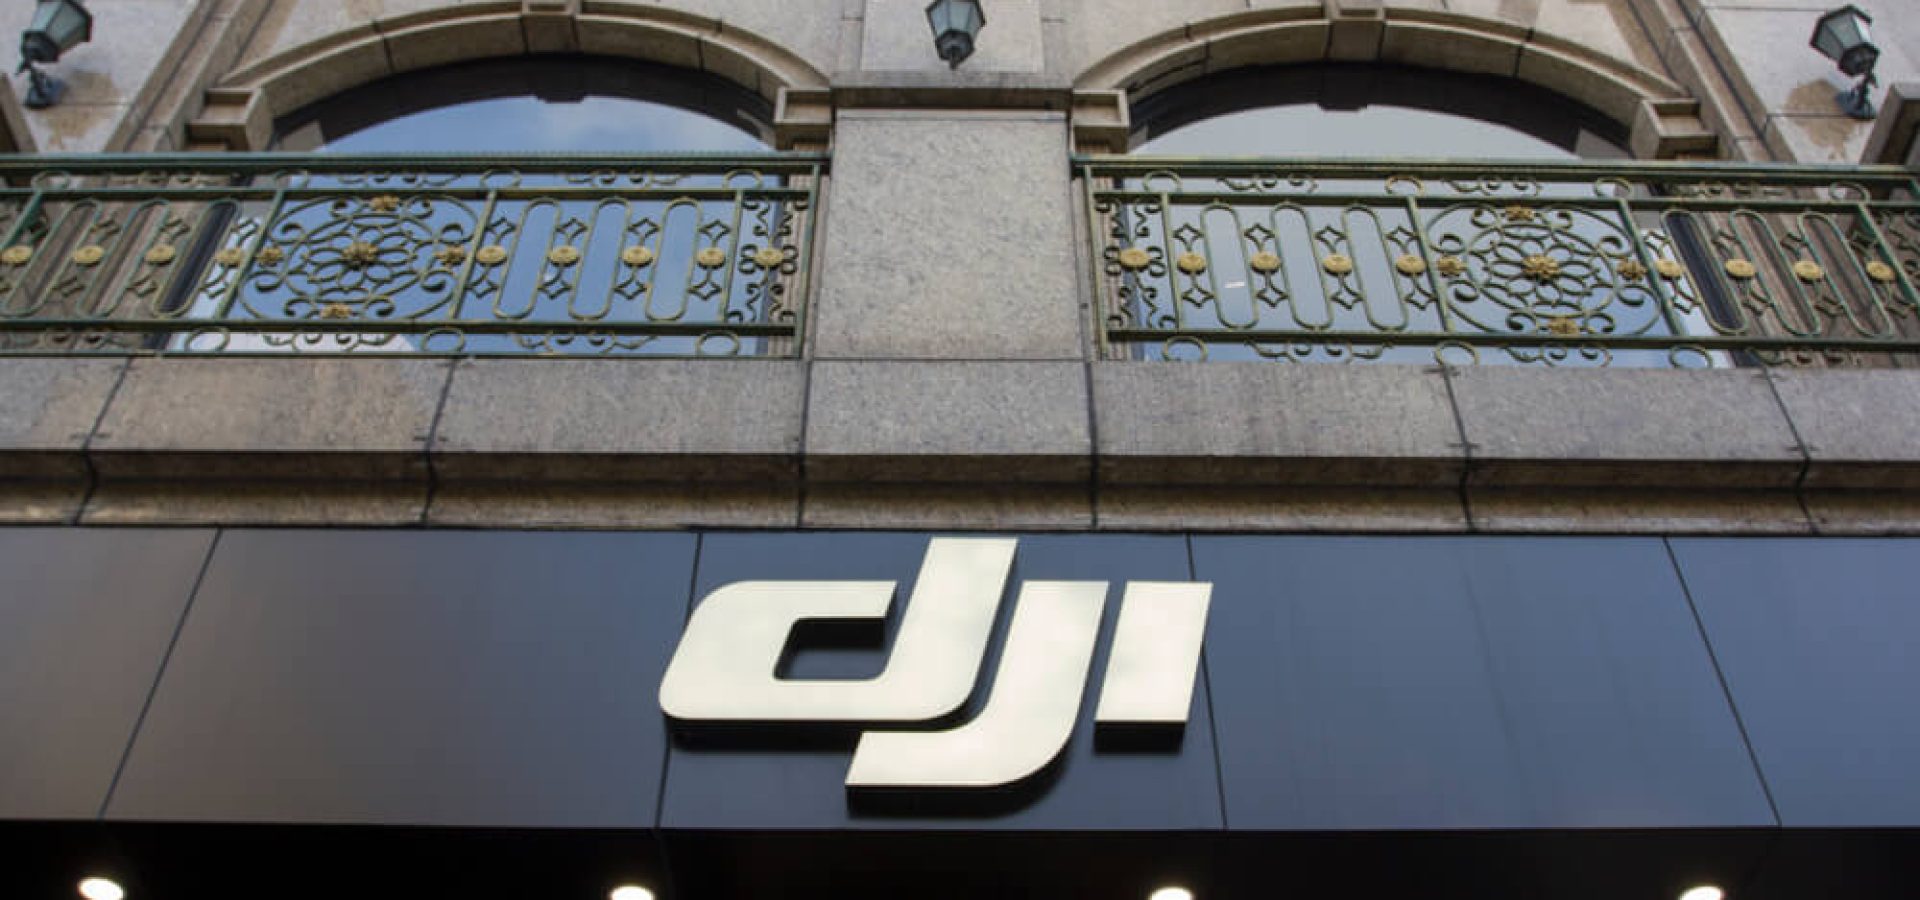 The DJI logo at a DJI store.